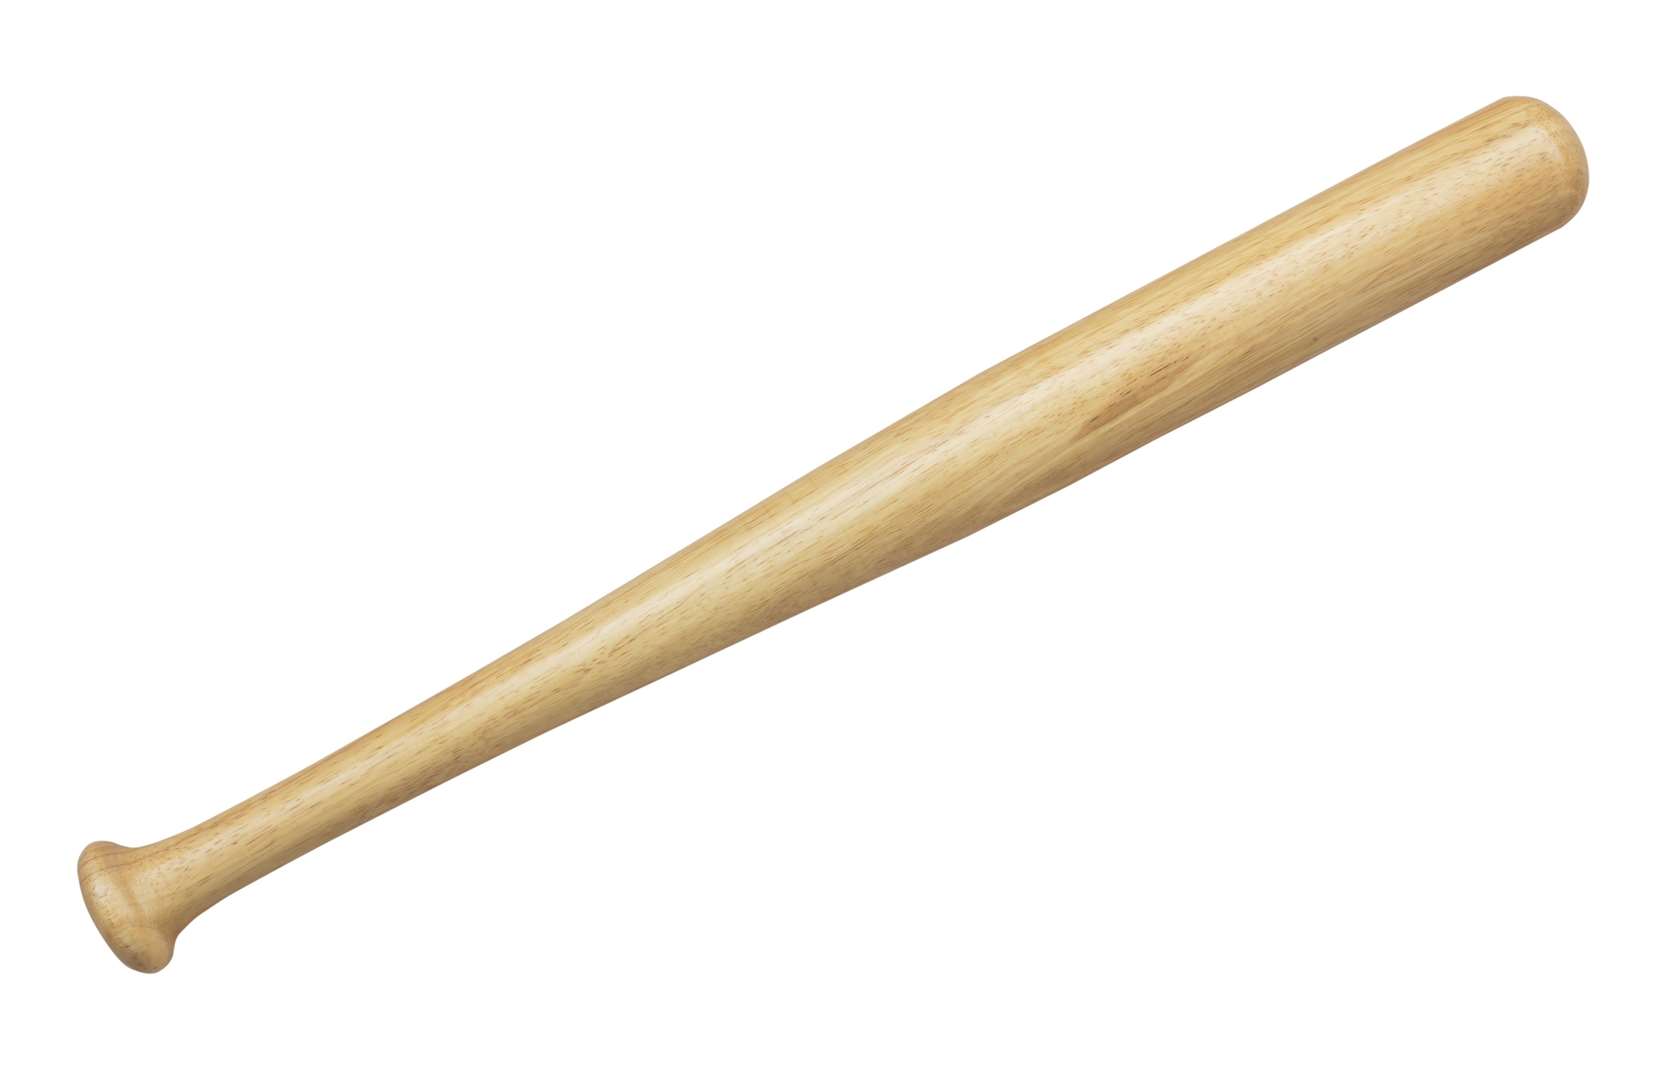 A baseball bat. Stock image